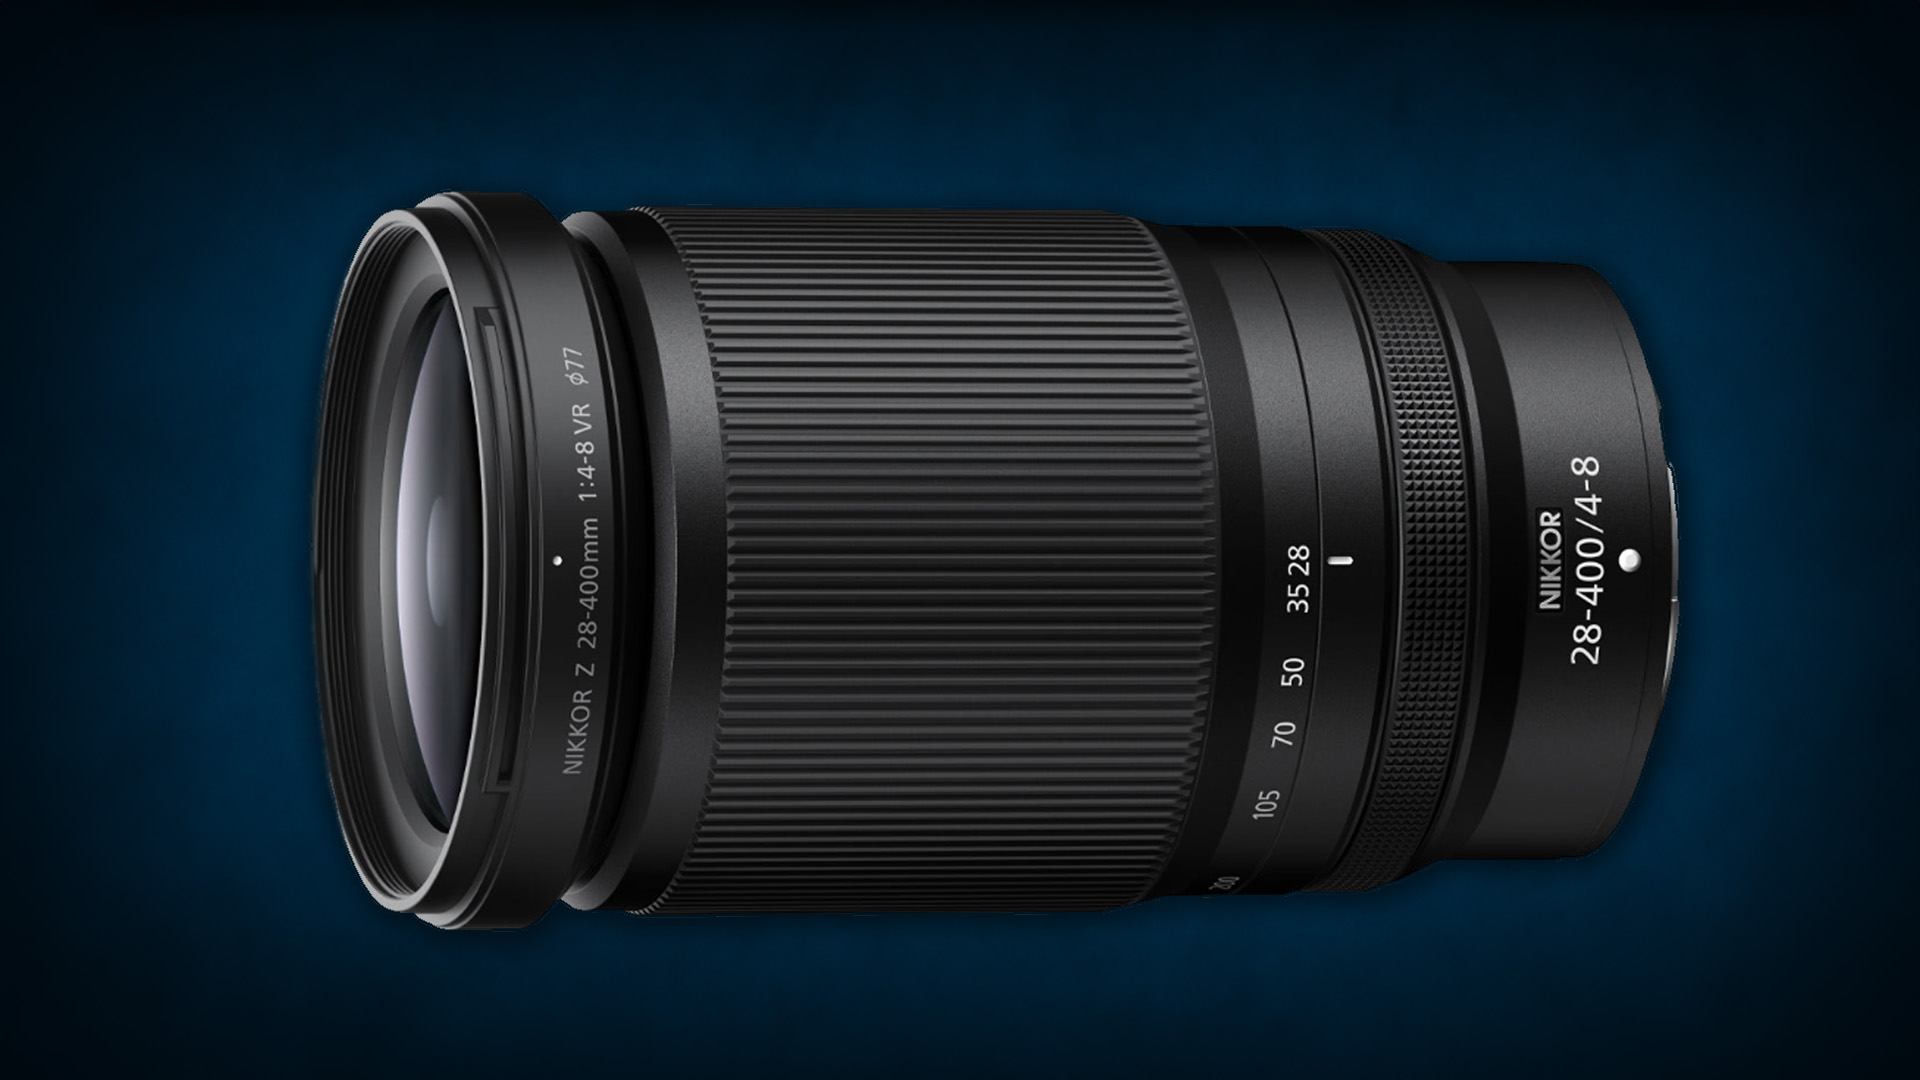 Nikon NIKKOR Z 28-400mm f/4-8 VR Zoom Lens Announced - an All 